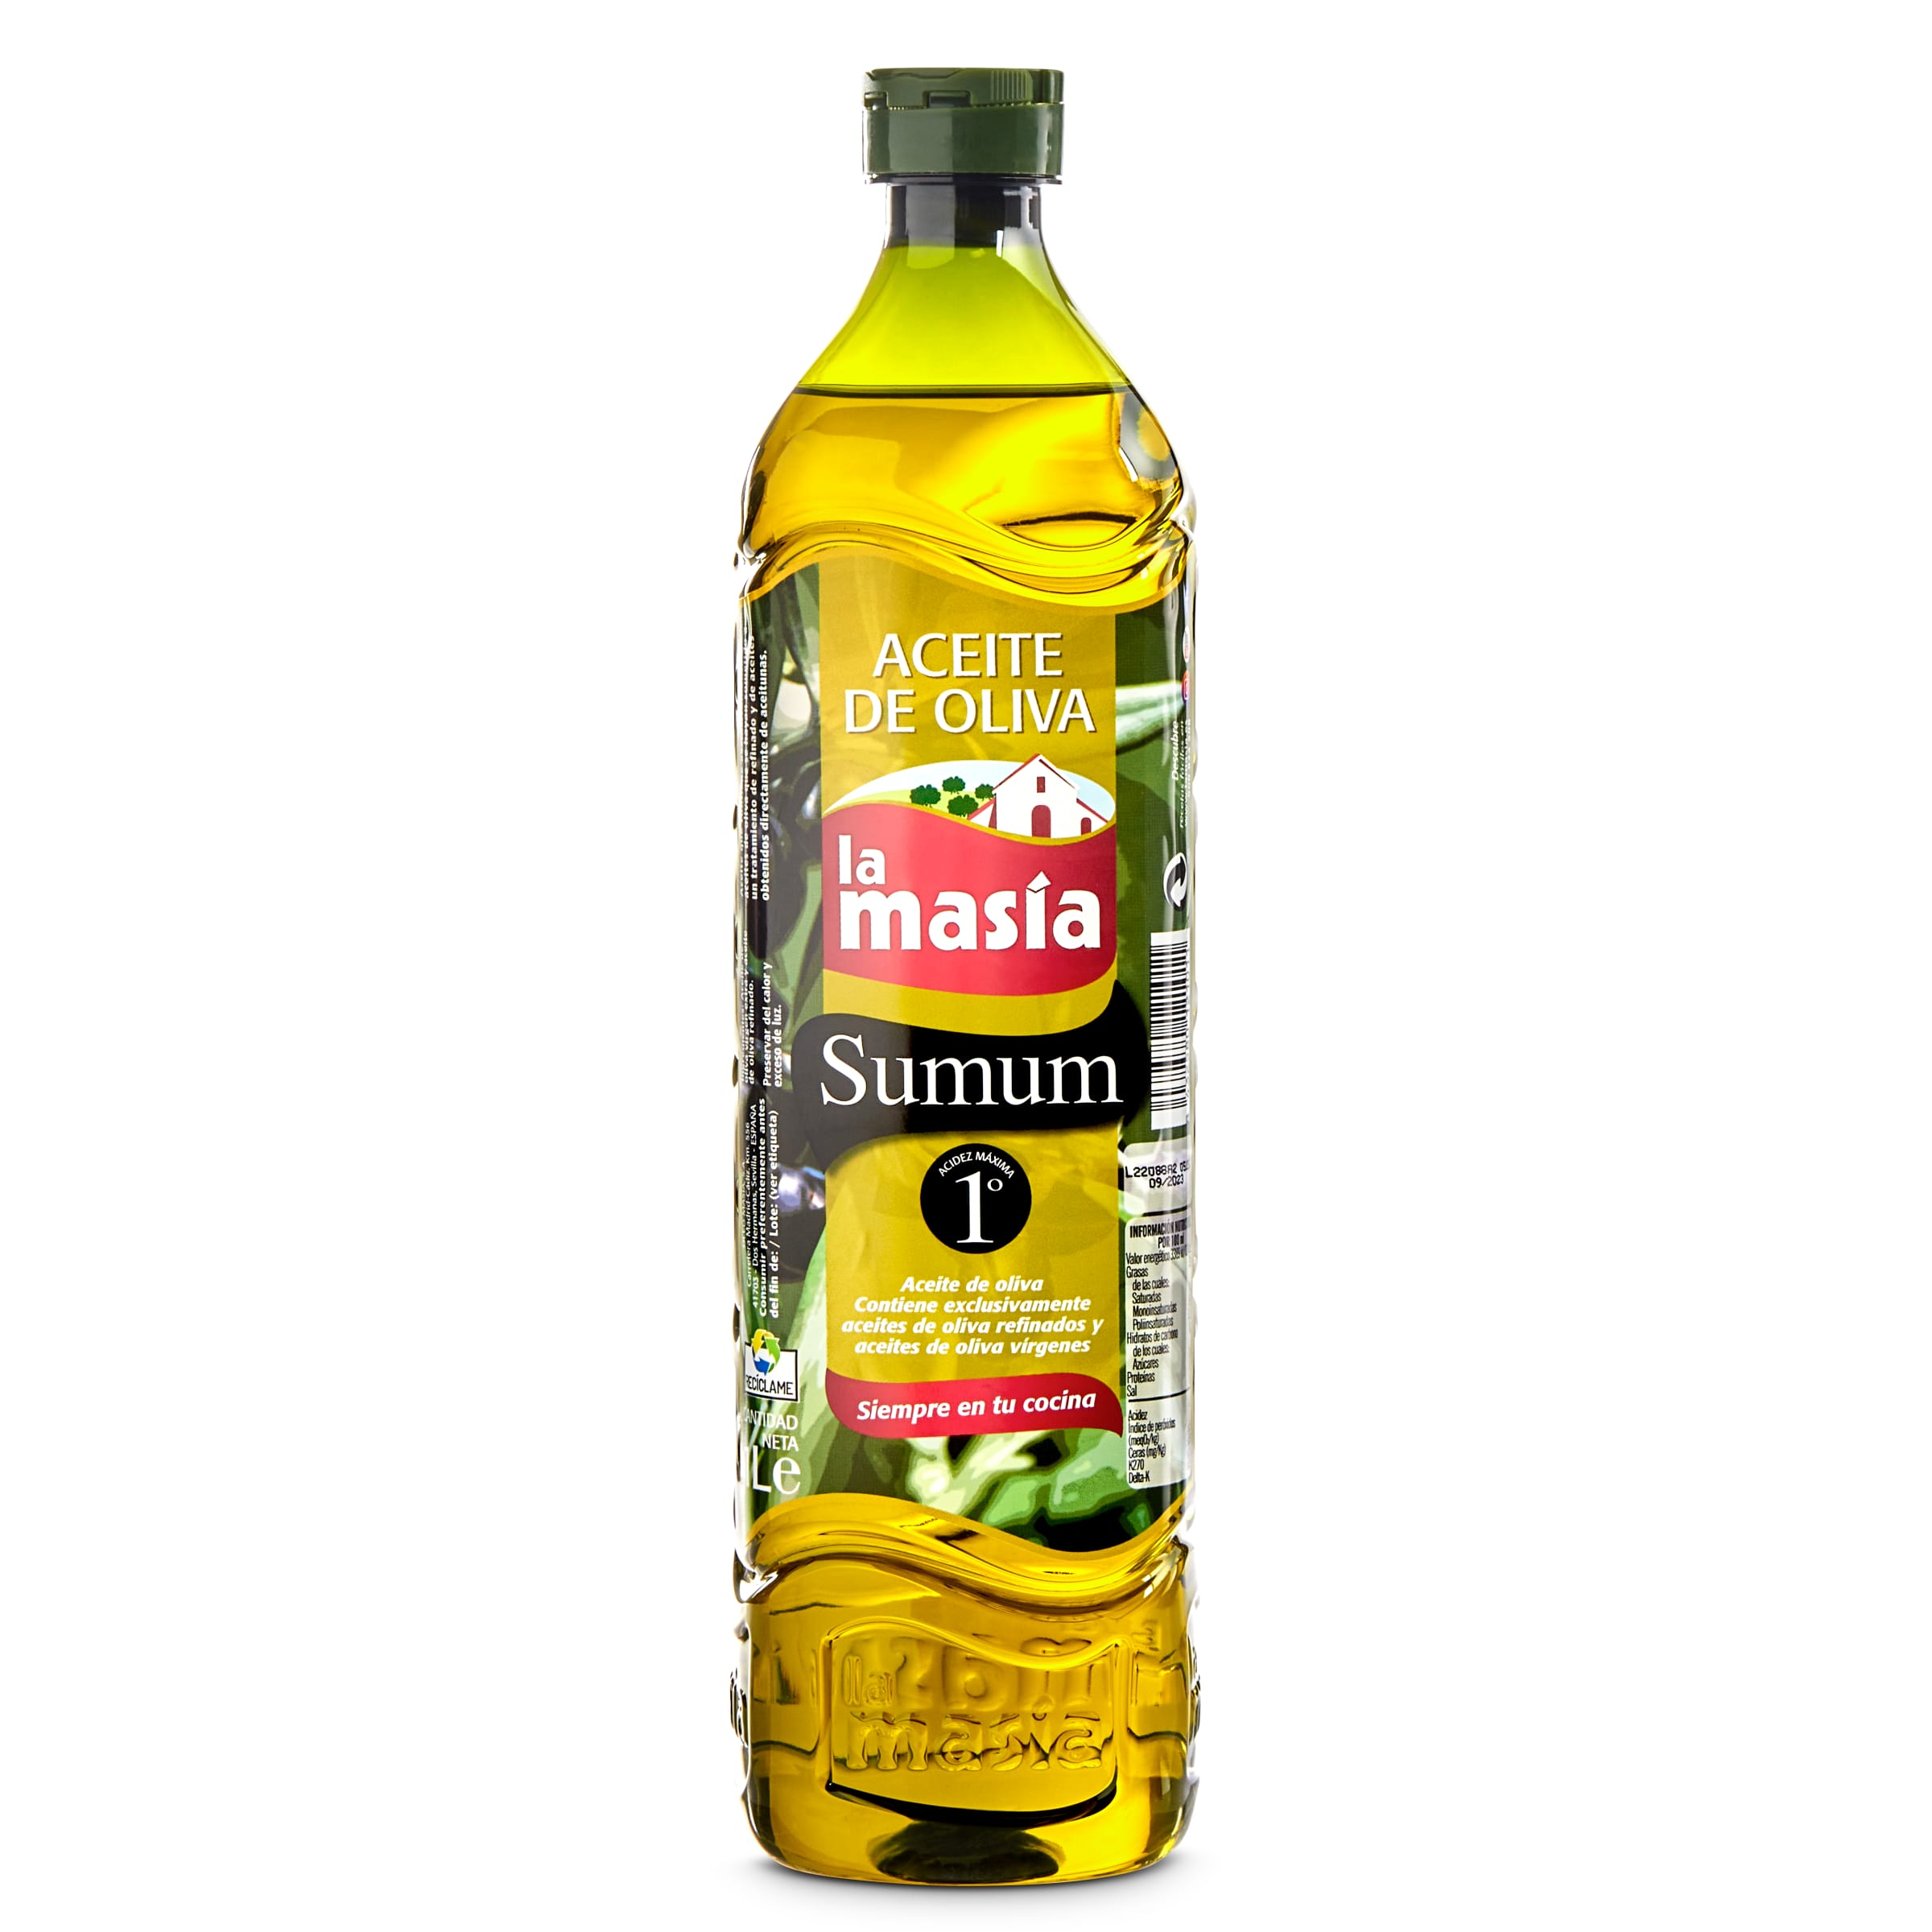 Aceite de oliva intenso La masía botella 1 l - Supermercados DIA